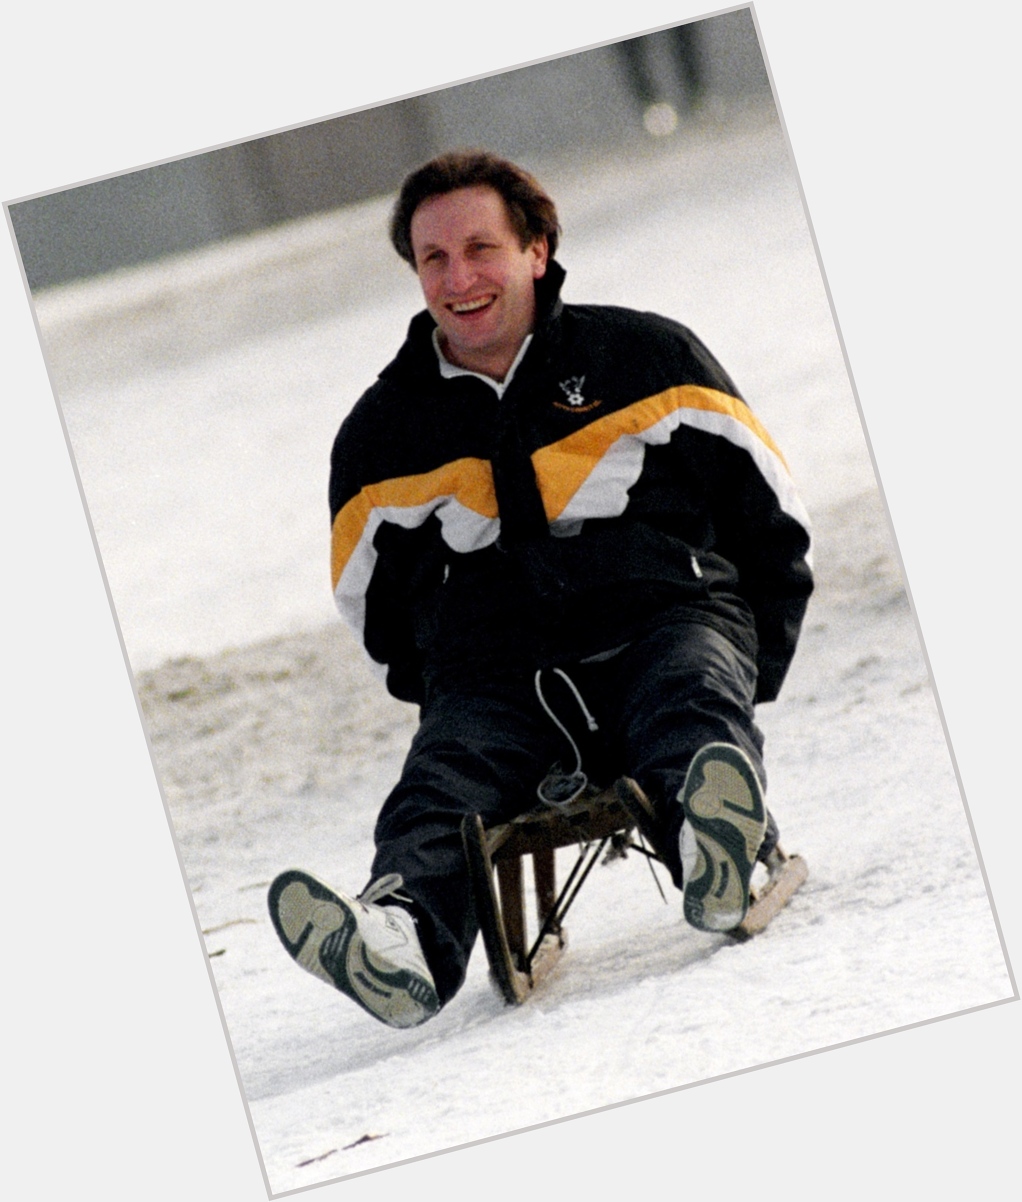 Neil Warnock on a sledge. Lovely stuff.

Happy Birthday, Neil. 